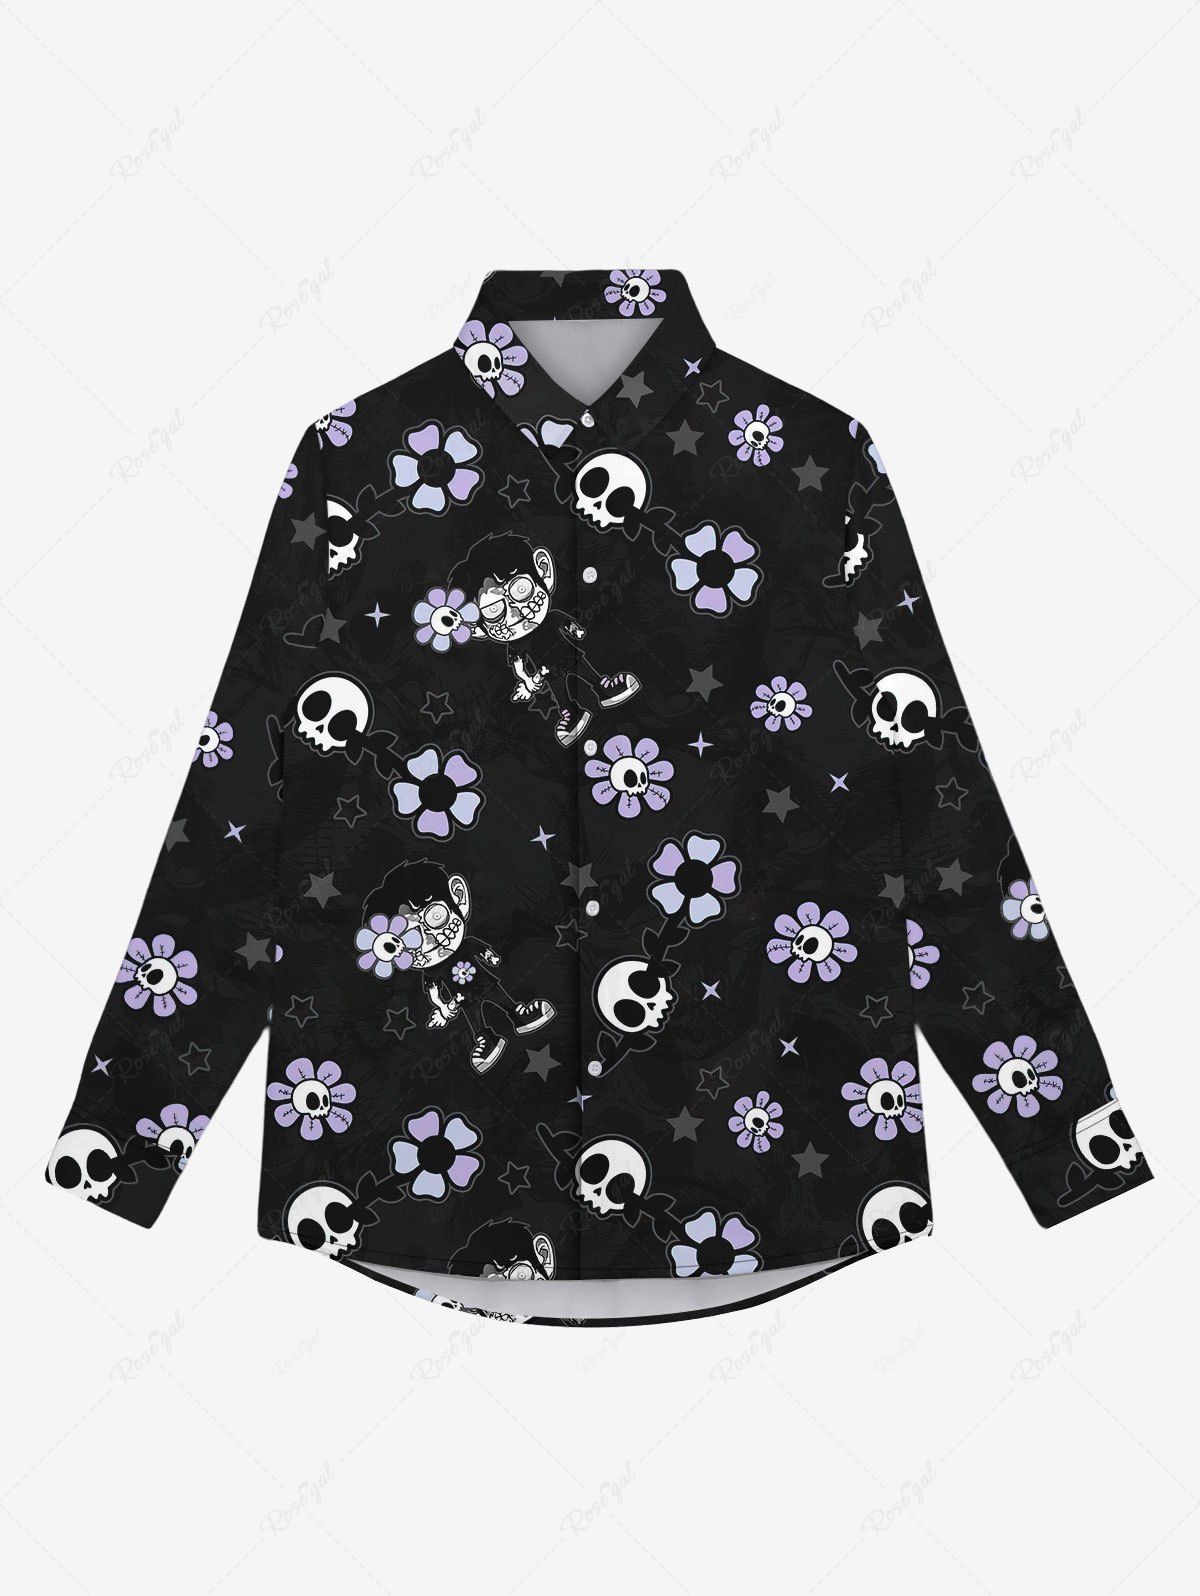 Store Gothic Turn-down Collar Skull Sunflower Star Cartoon Boy Print Buttons Shirt For Men  